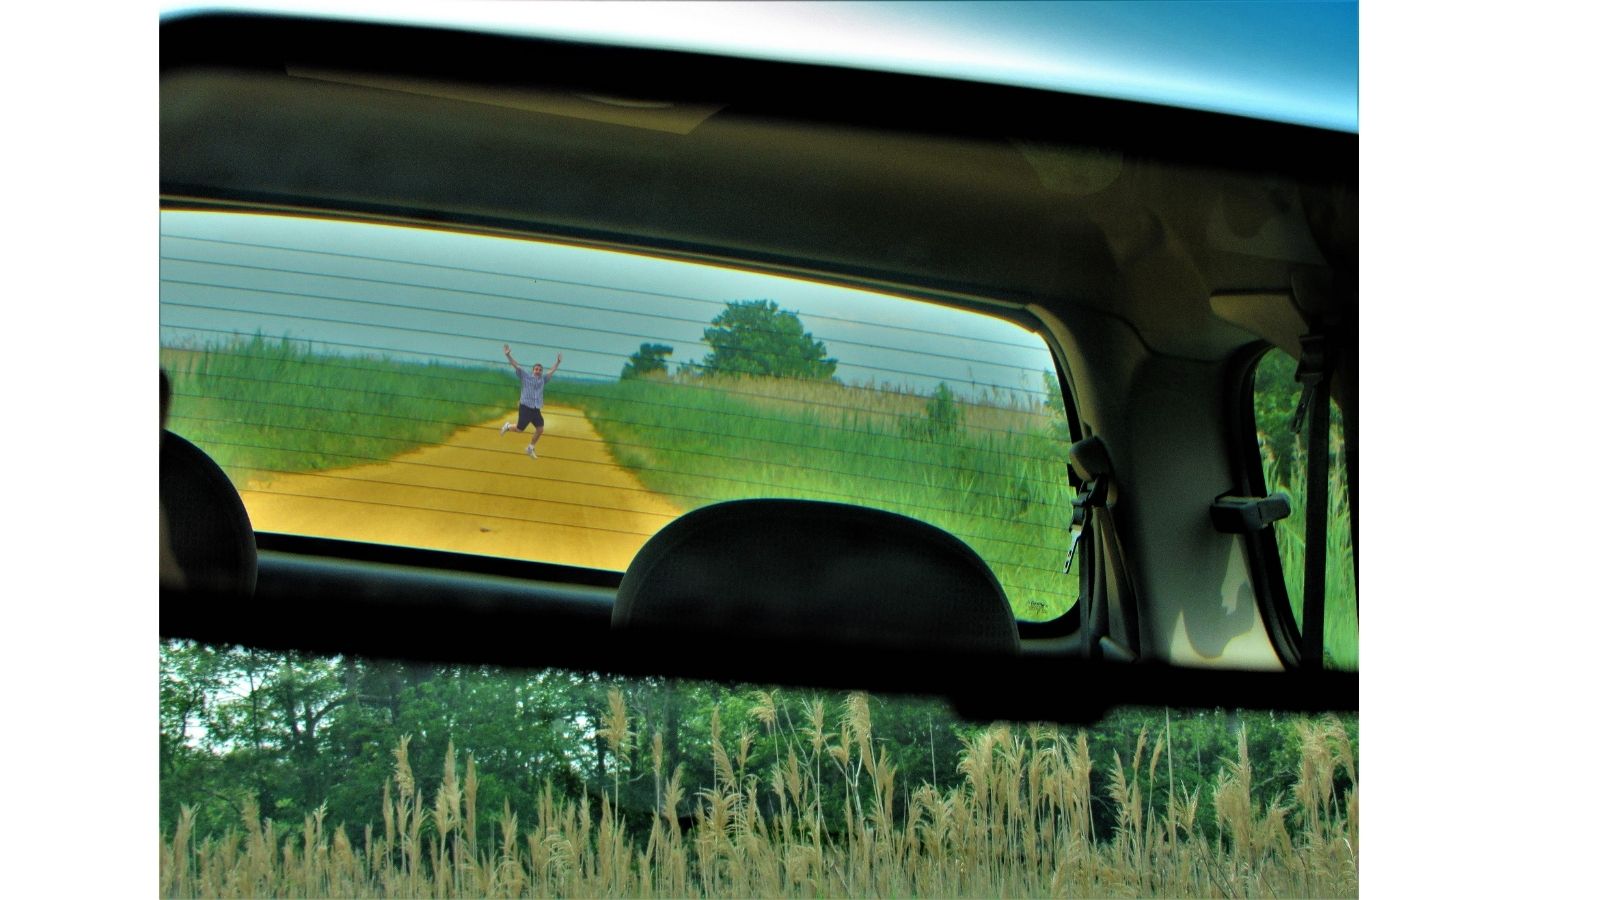 a person running on a dirt road through a car window